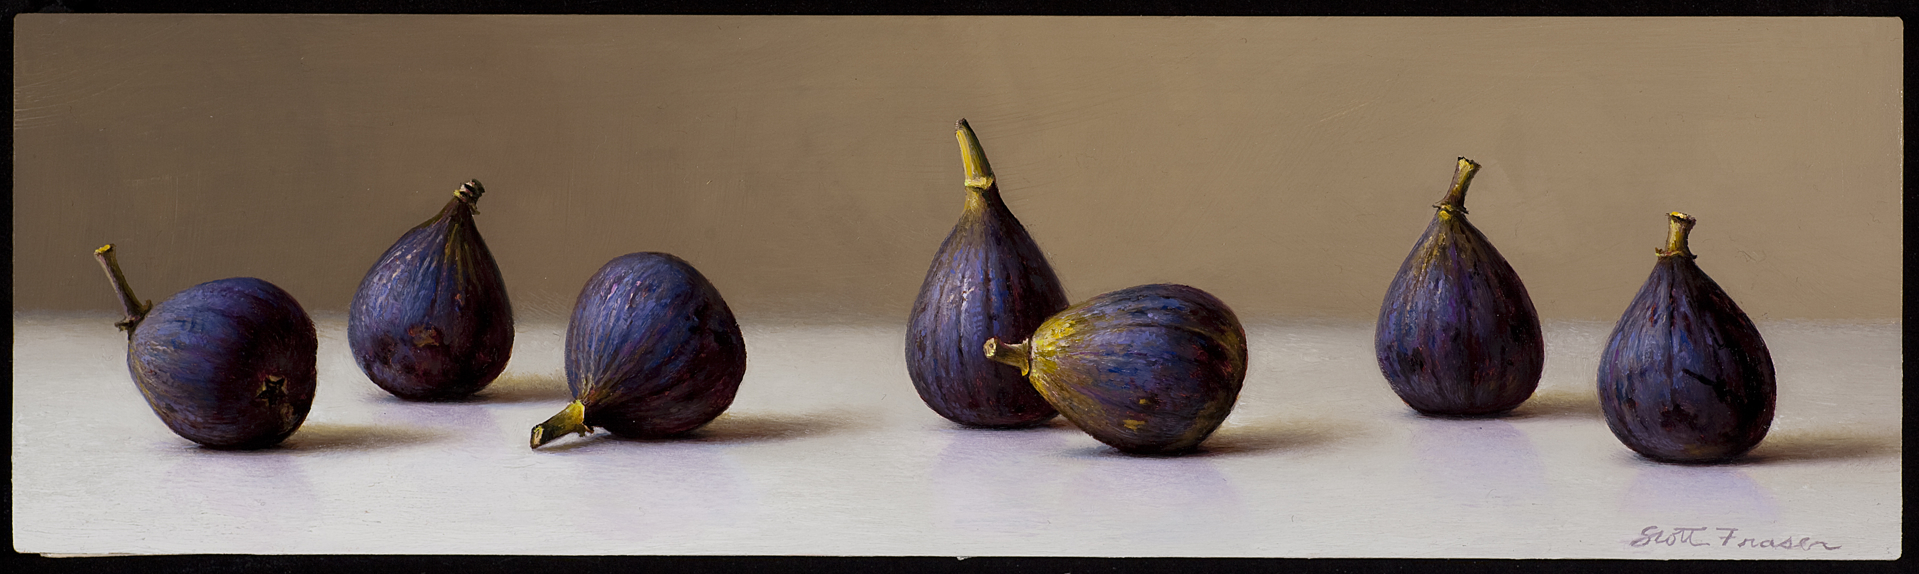 Seven Figs by Scott Fraser